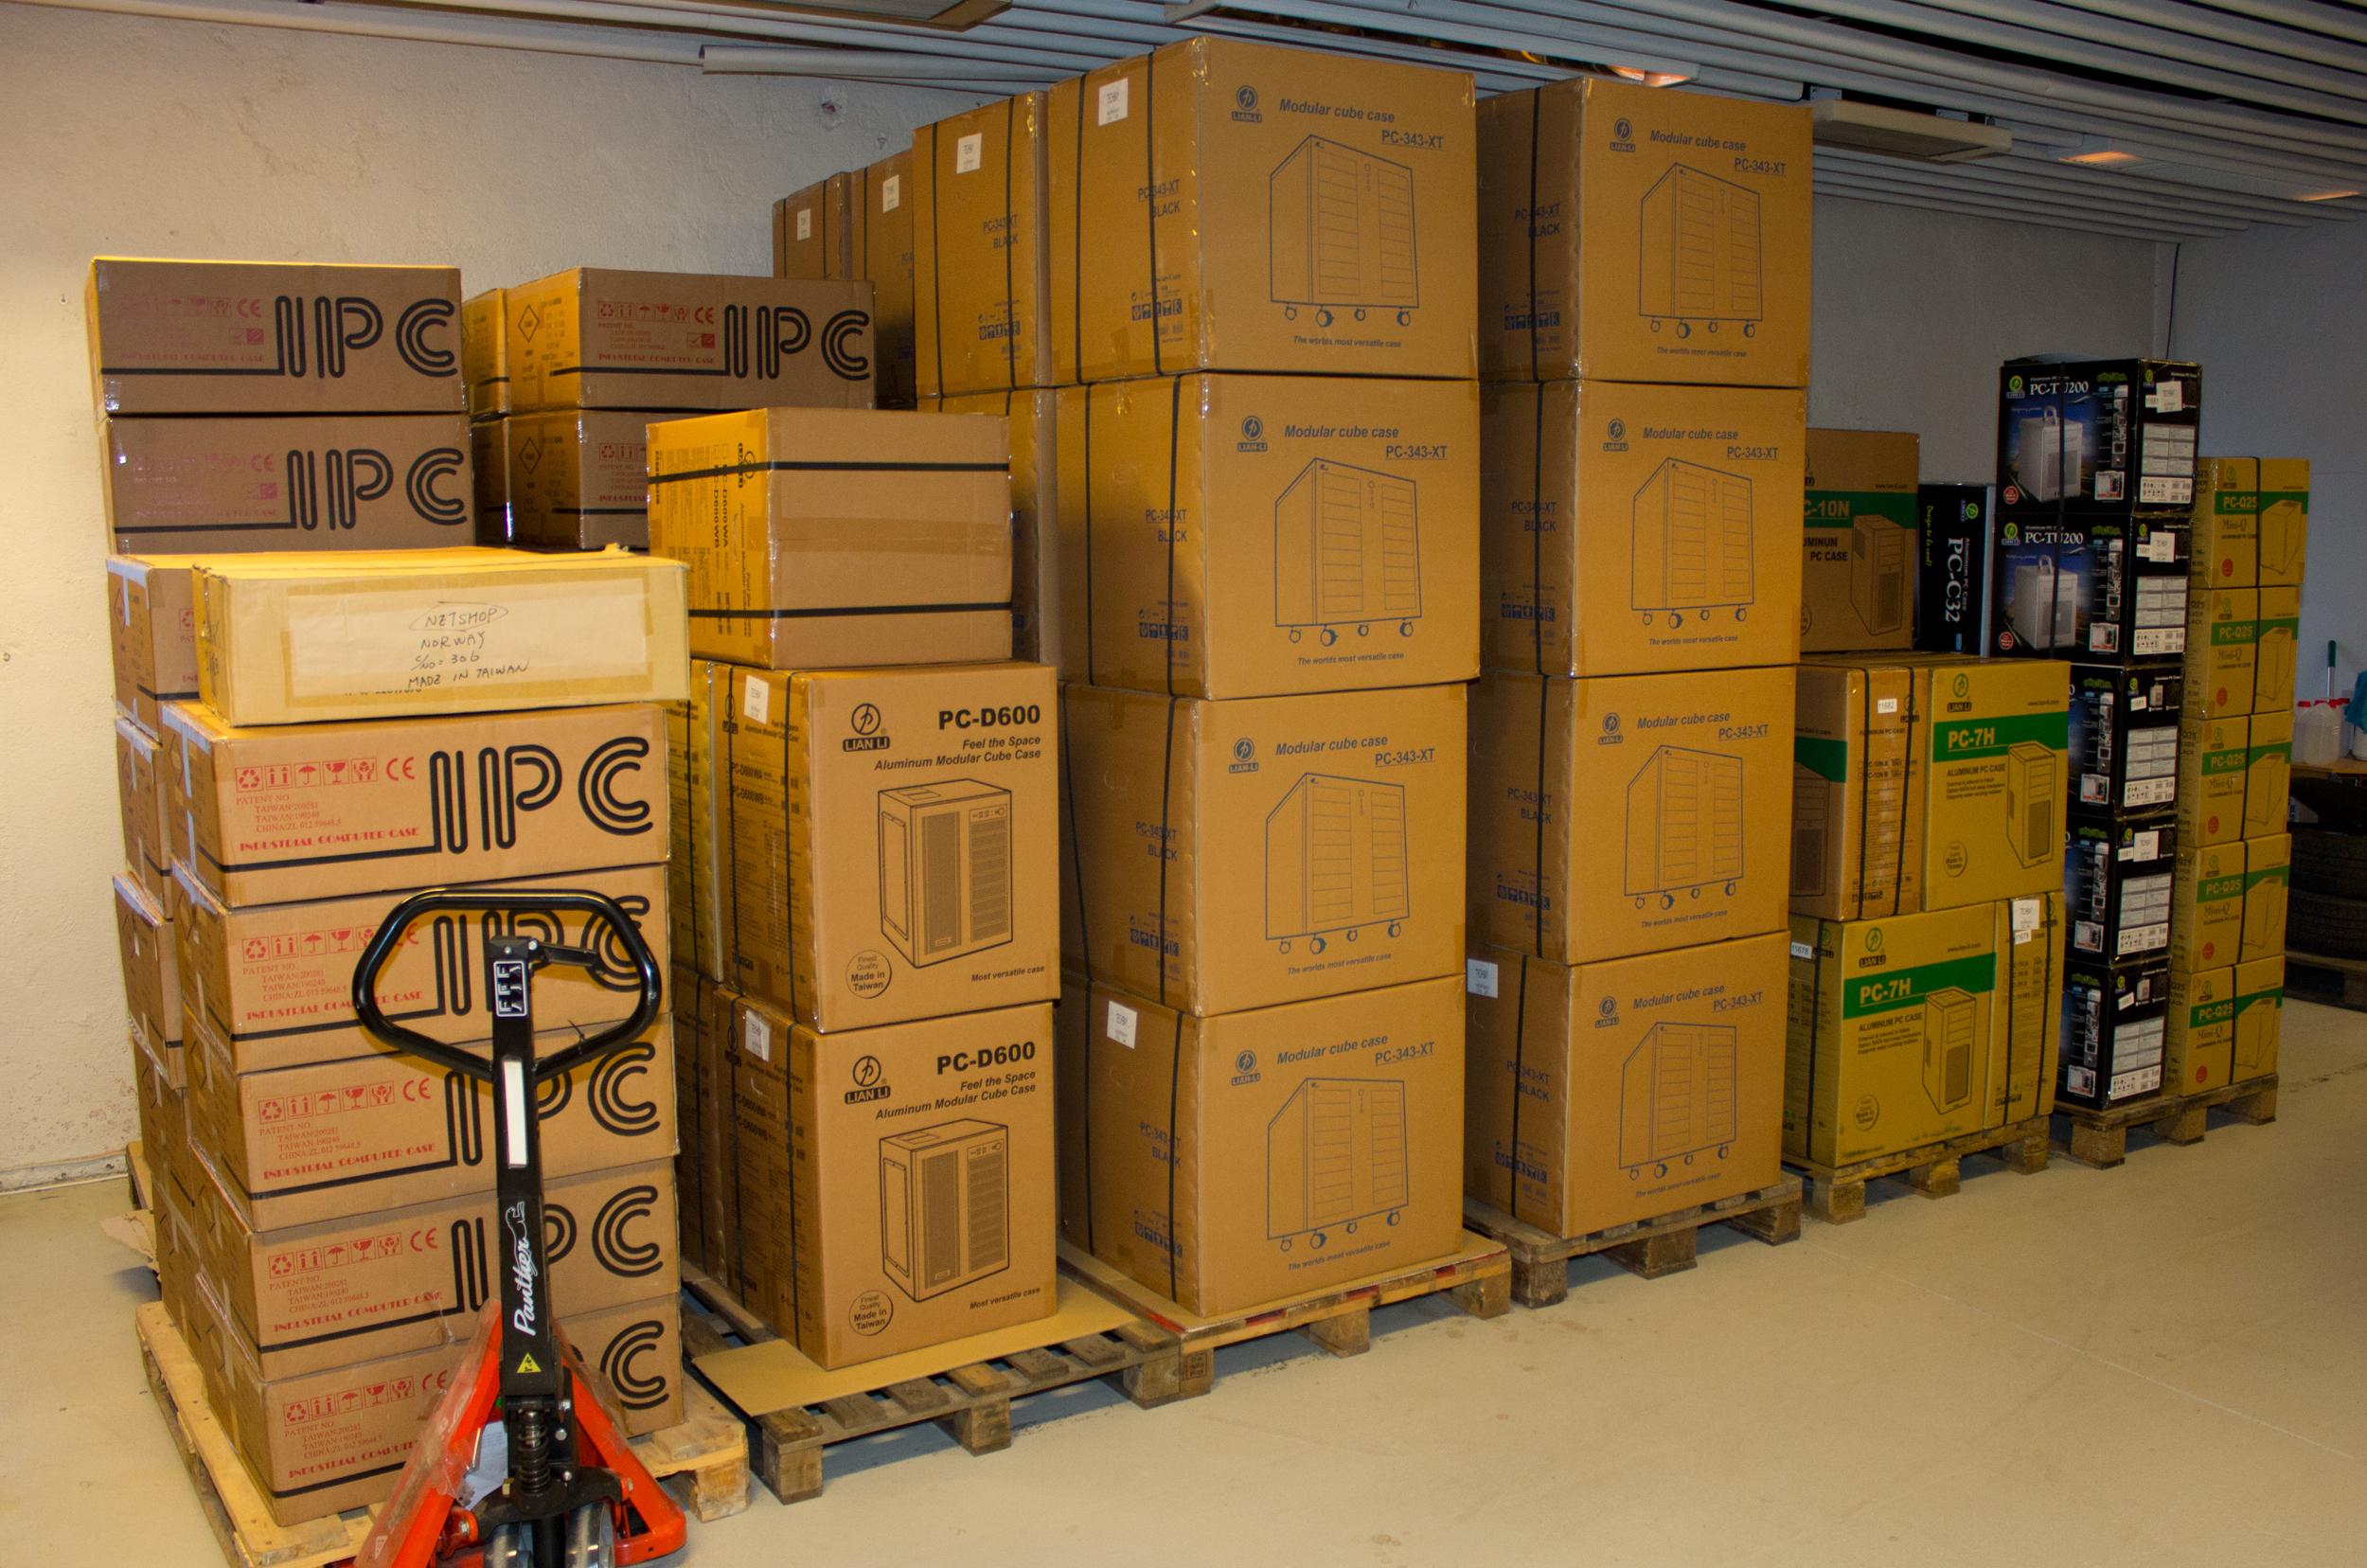 På lageret står det palle på palle med kabinetter.Foto: Rolf B. Wegner, Hardware.no